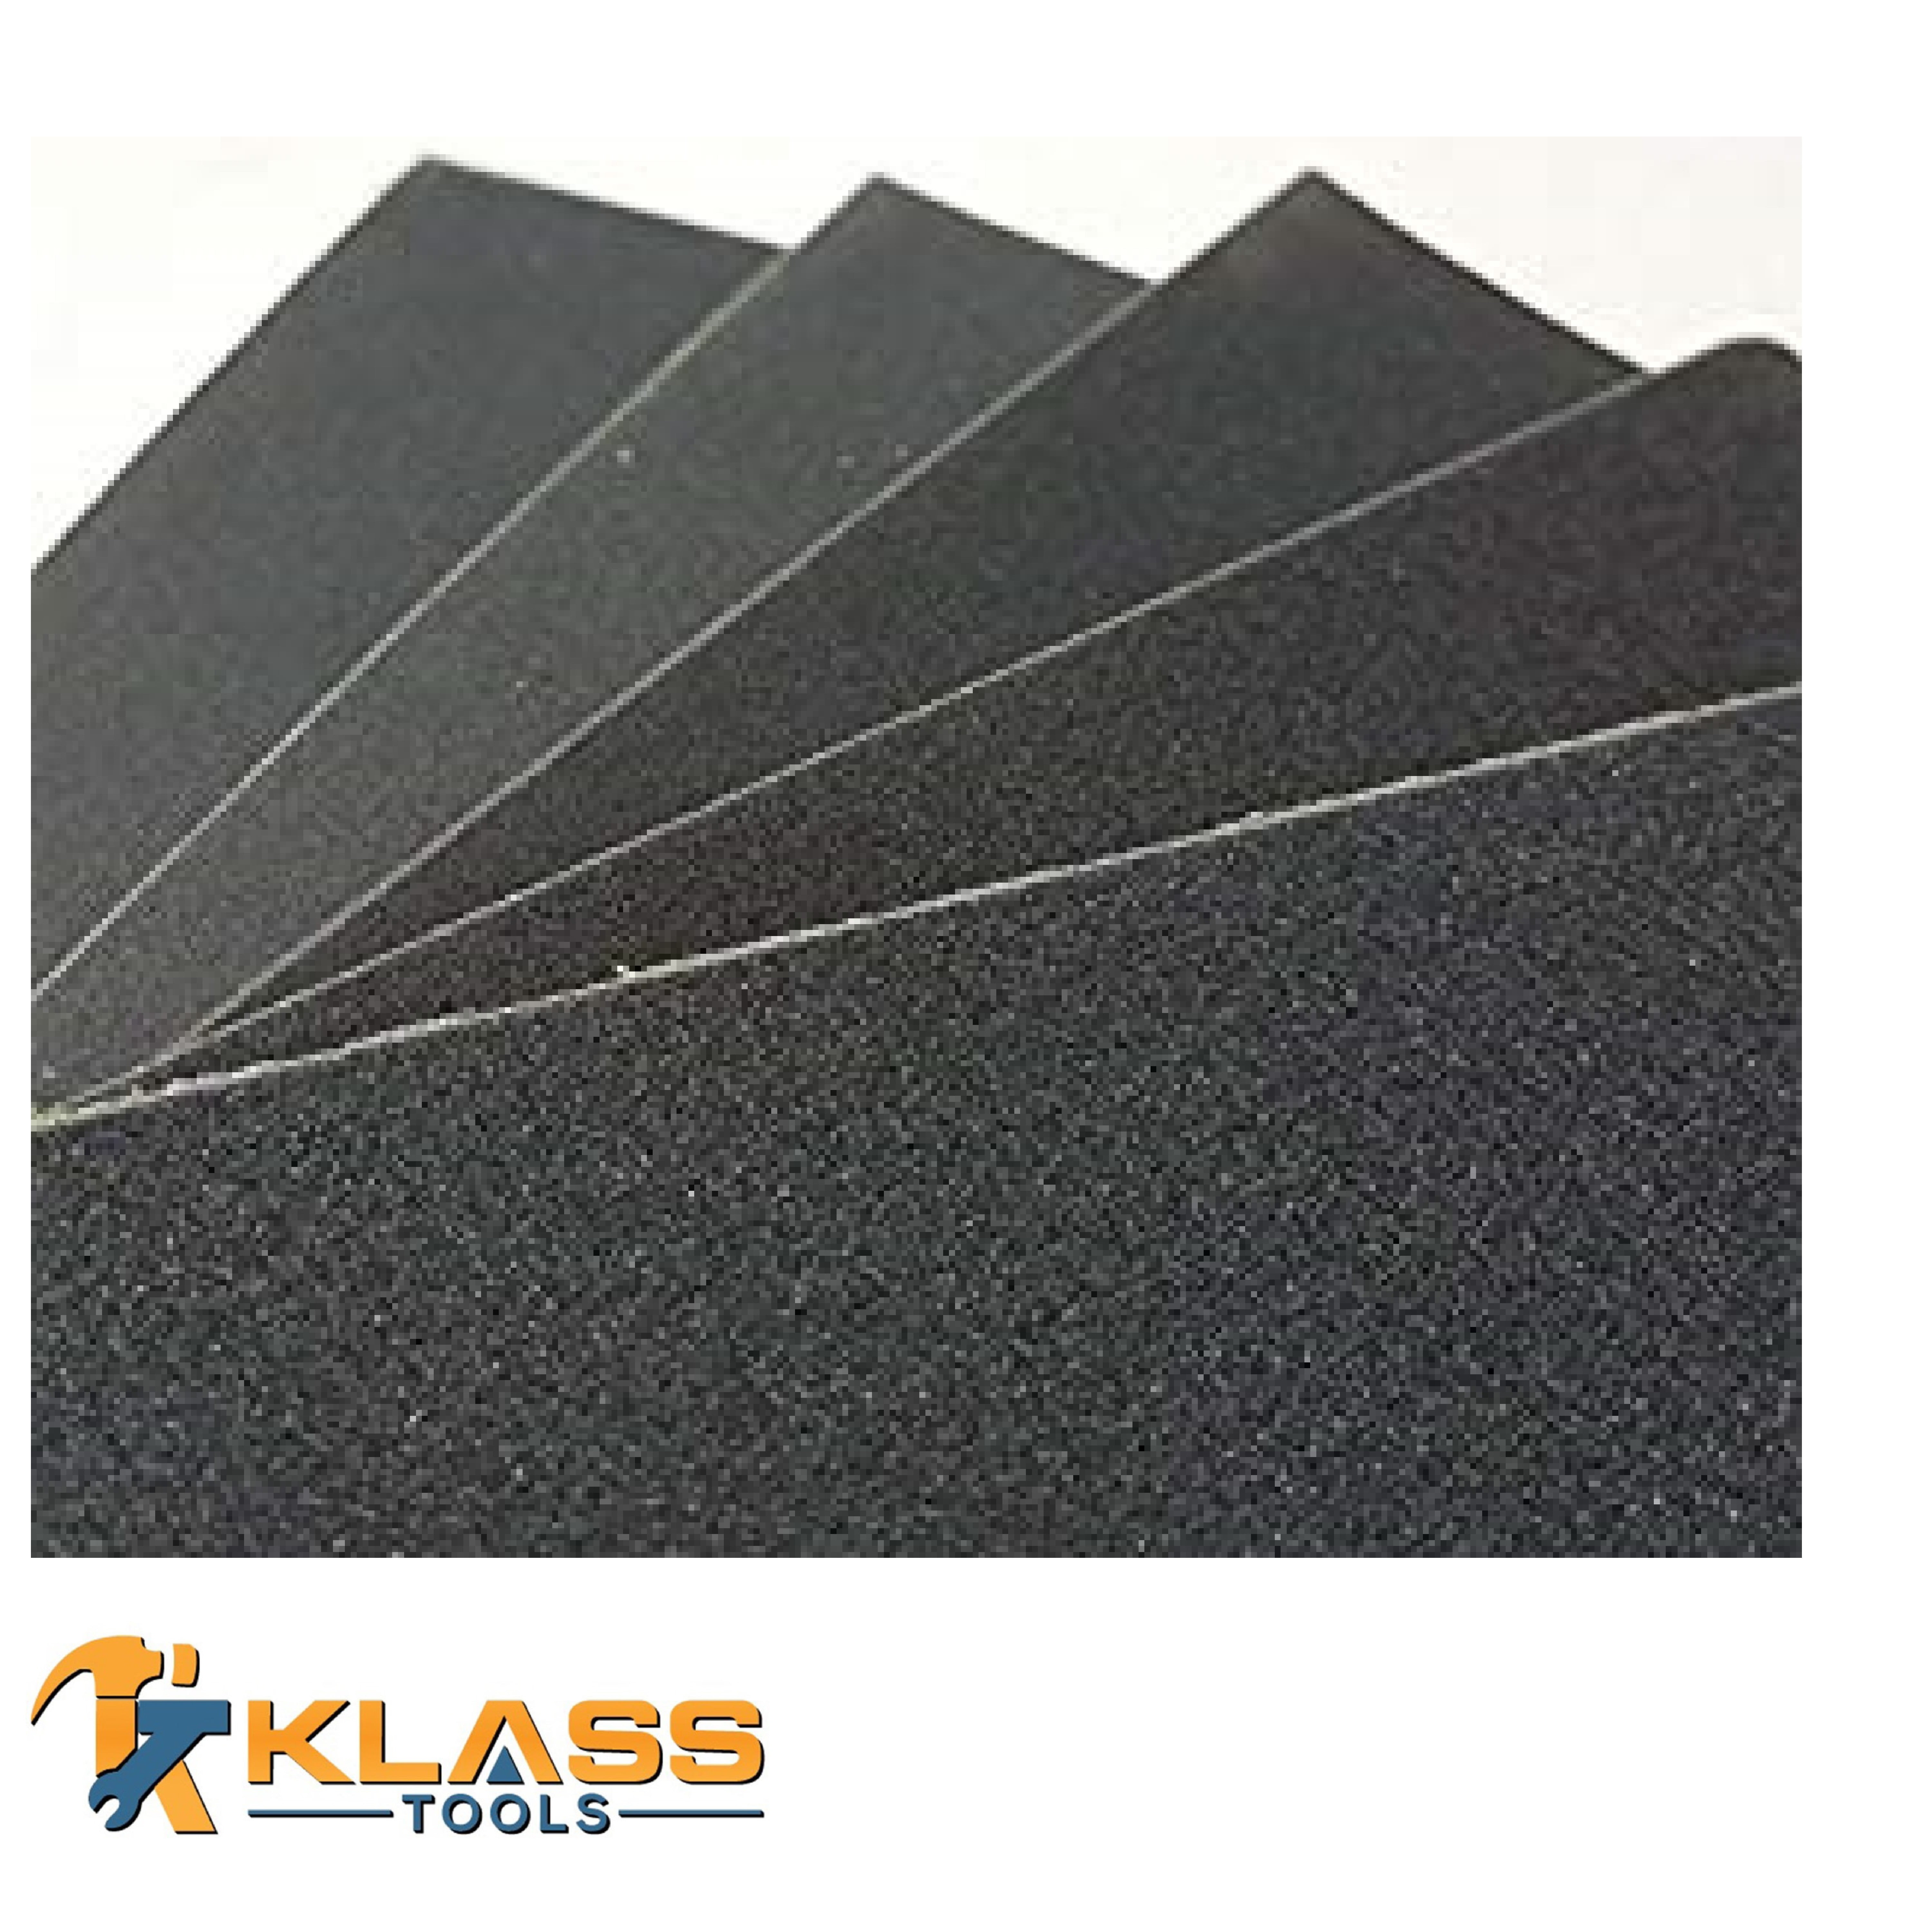 220 Grit Aluminium Oxide Sandpaper 3-1/4 x 11 in Sheet Sets Pack 